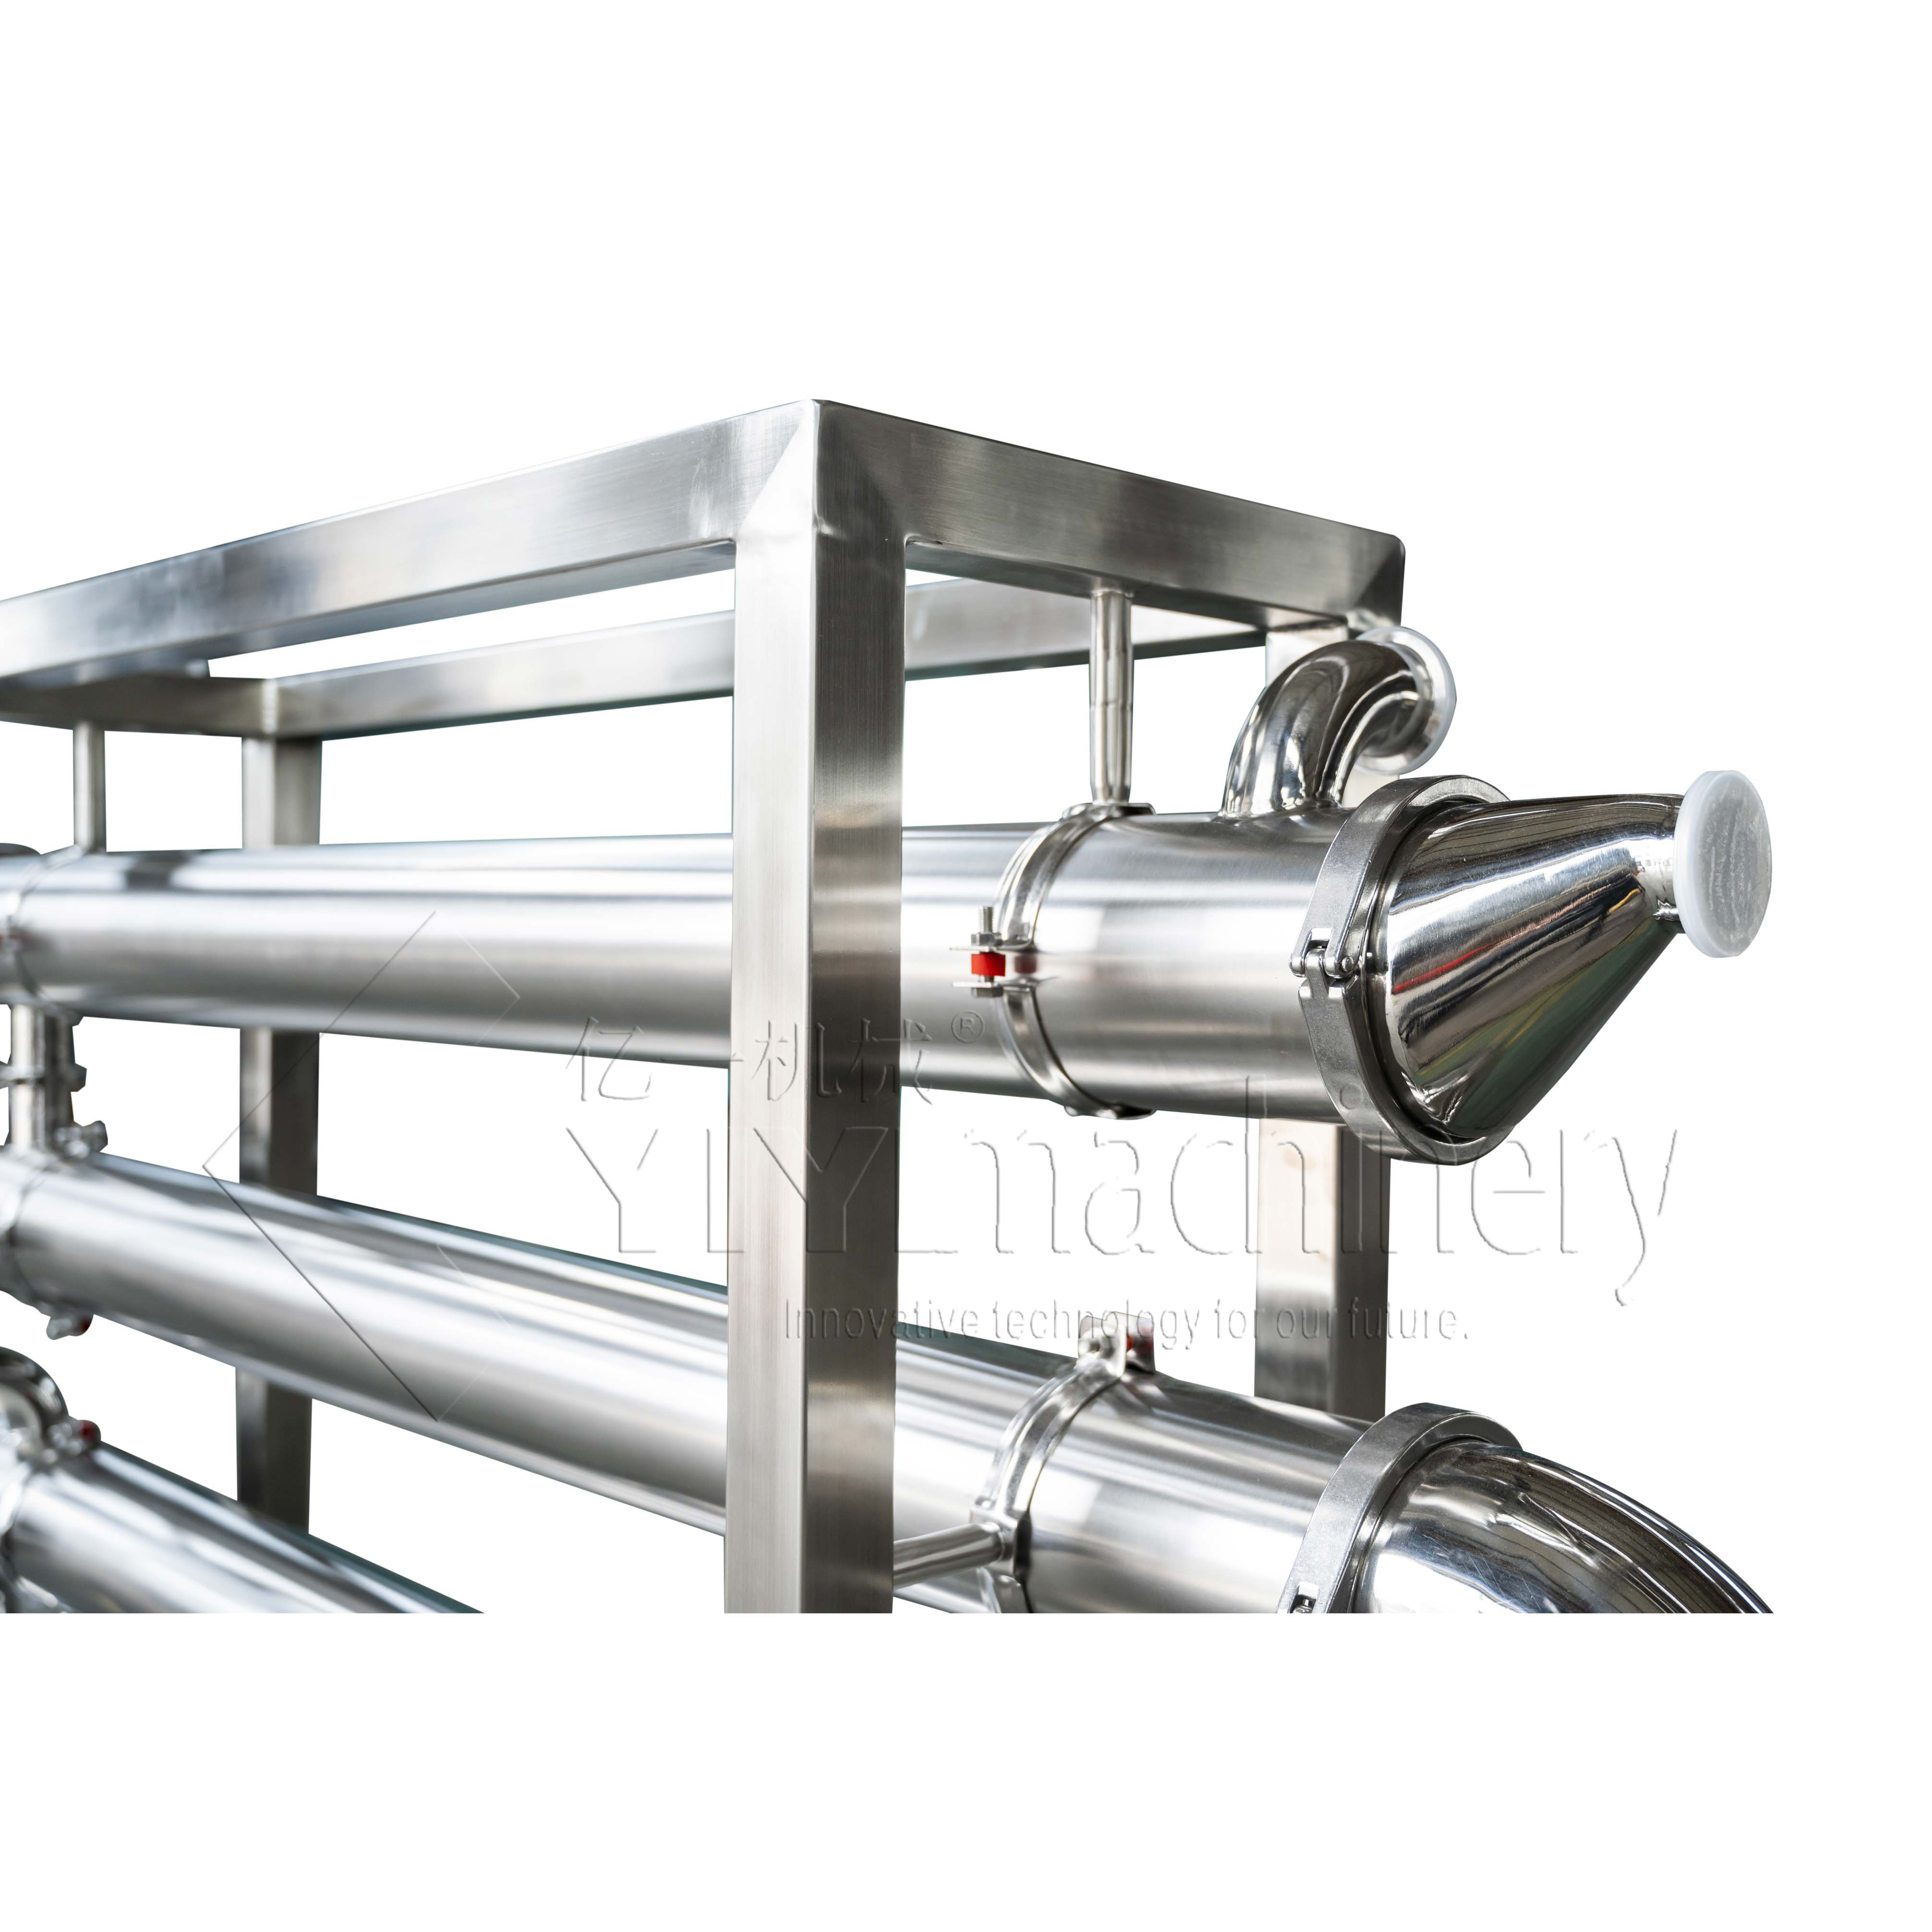 Stainless Steel Titanium Gasket Plate Heat Exchanger for Water Oil Sugar Milk Beer Chemical Industry Cooling And Heating Cross-flow Heat Exchanger 